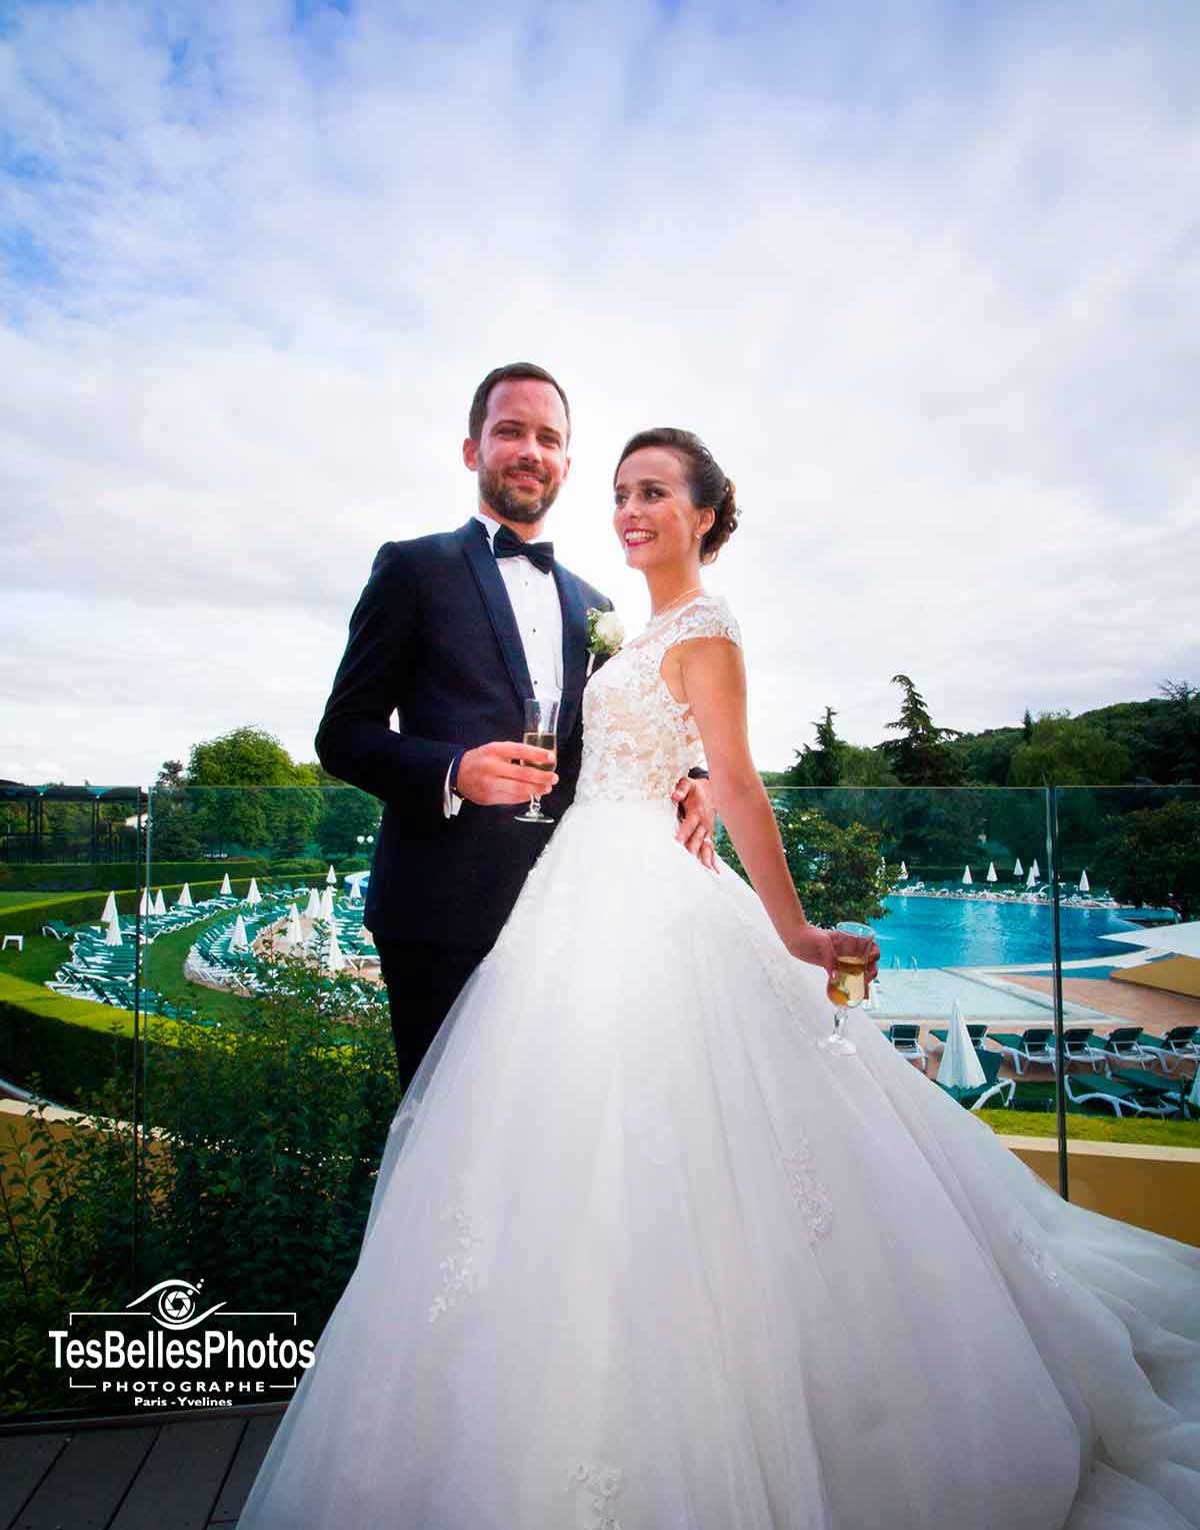 Photographe de mariage Le Port-Marly, photos reportage mariage à salles de mariage Les Pyramides Le Port-Marly en Yvelines